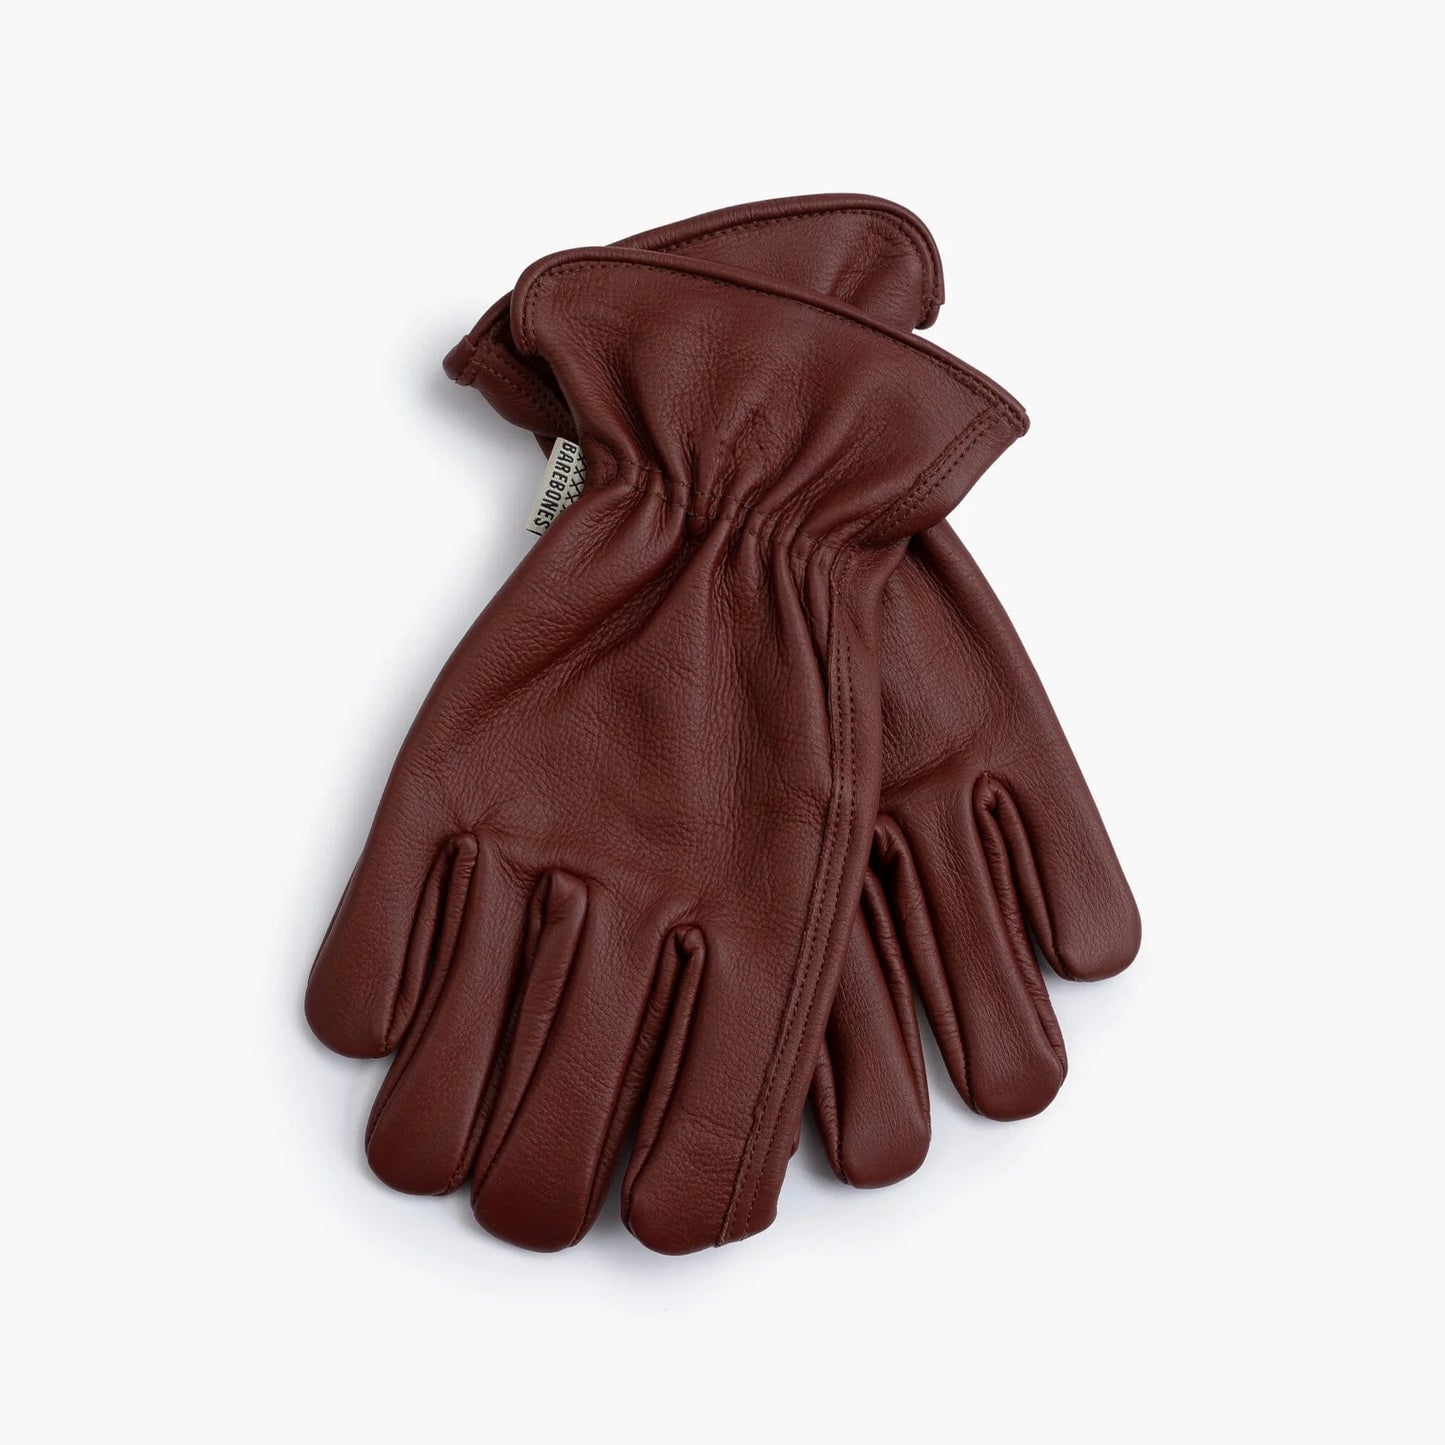 BAREBONES - Classic Work Glove